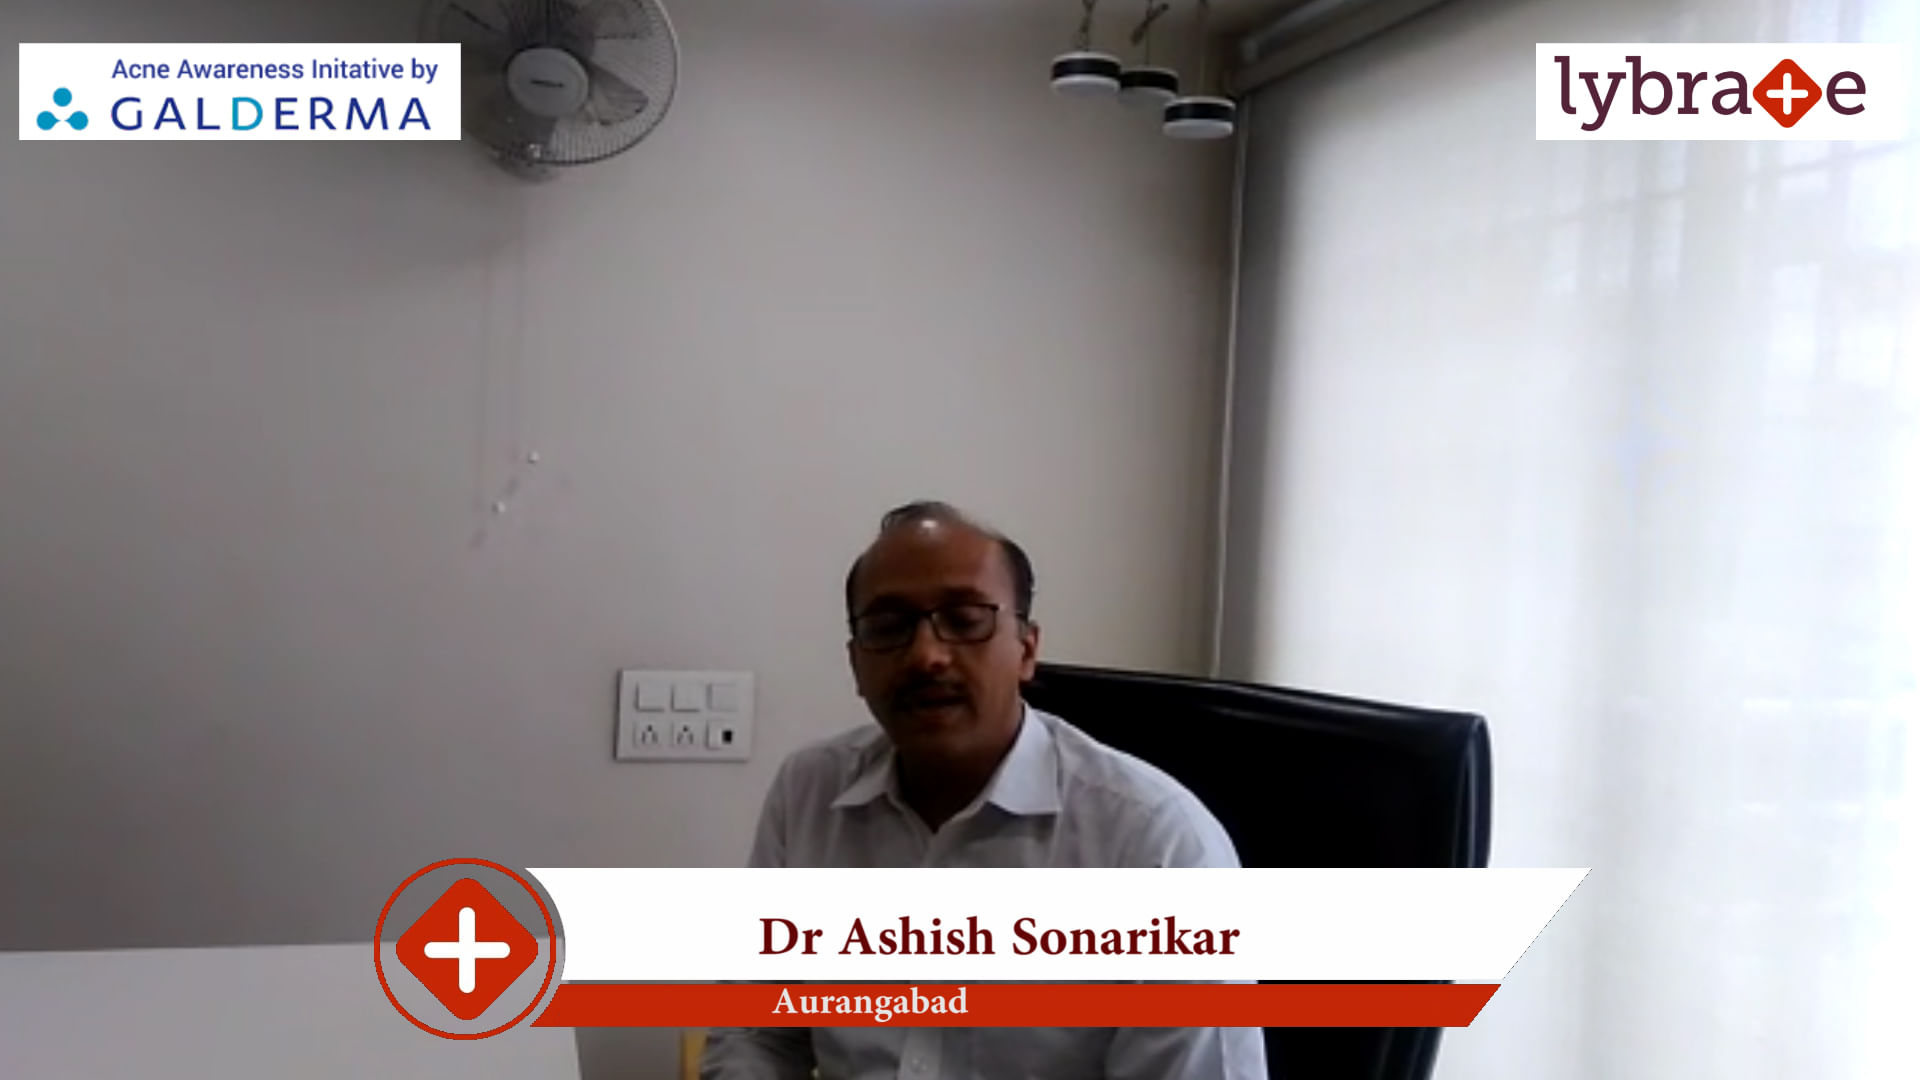 Lybrate | Dr. Ashish Sonarikar speaks on IMPORTANCE OF TREATING ACNE EARLY